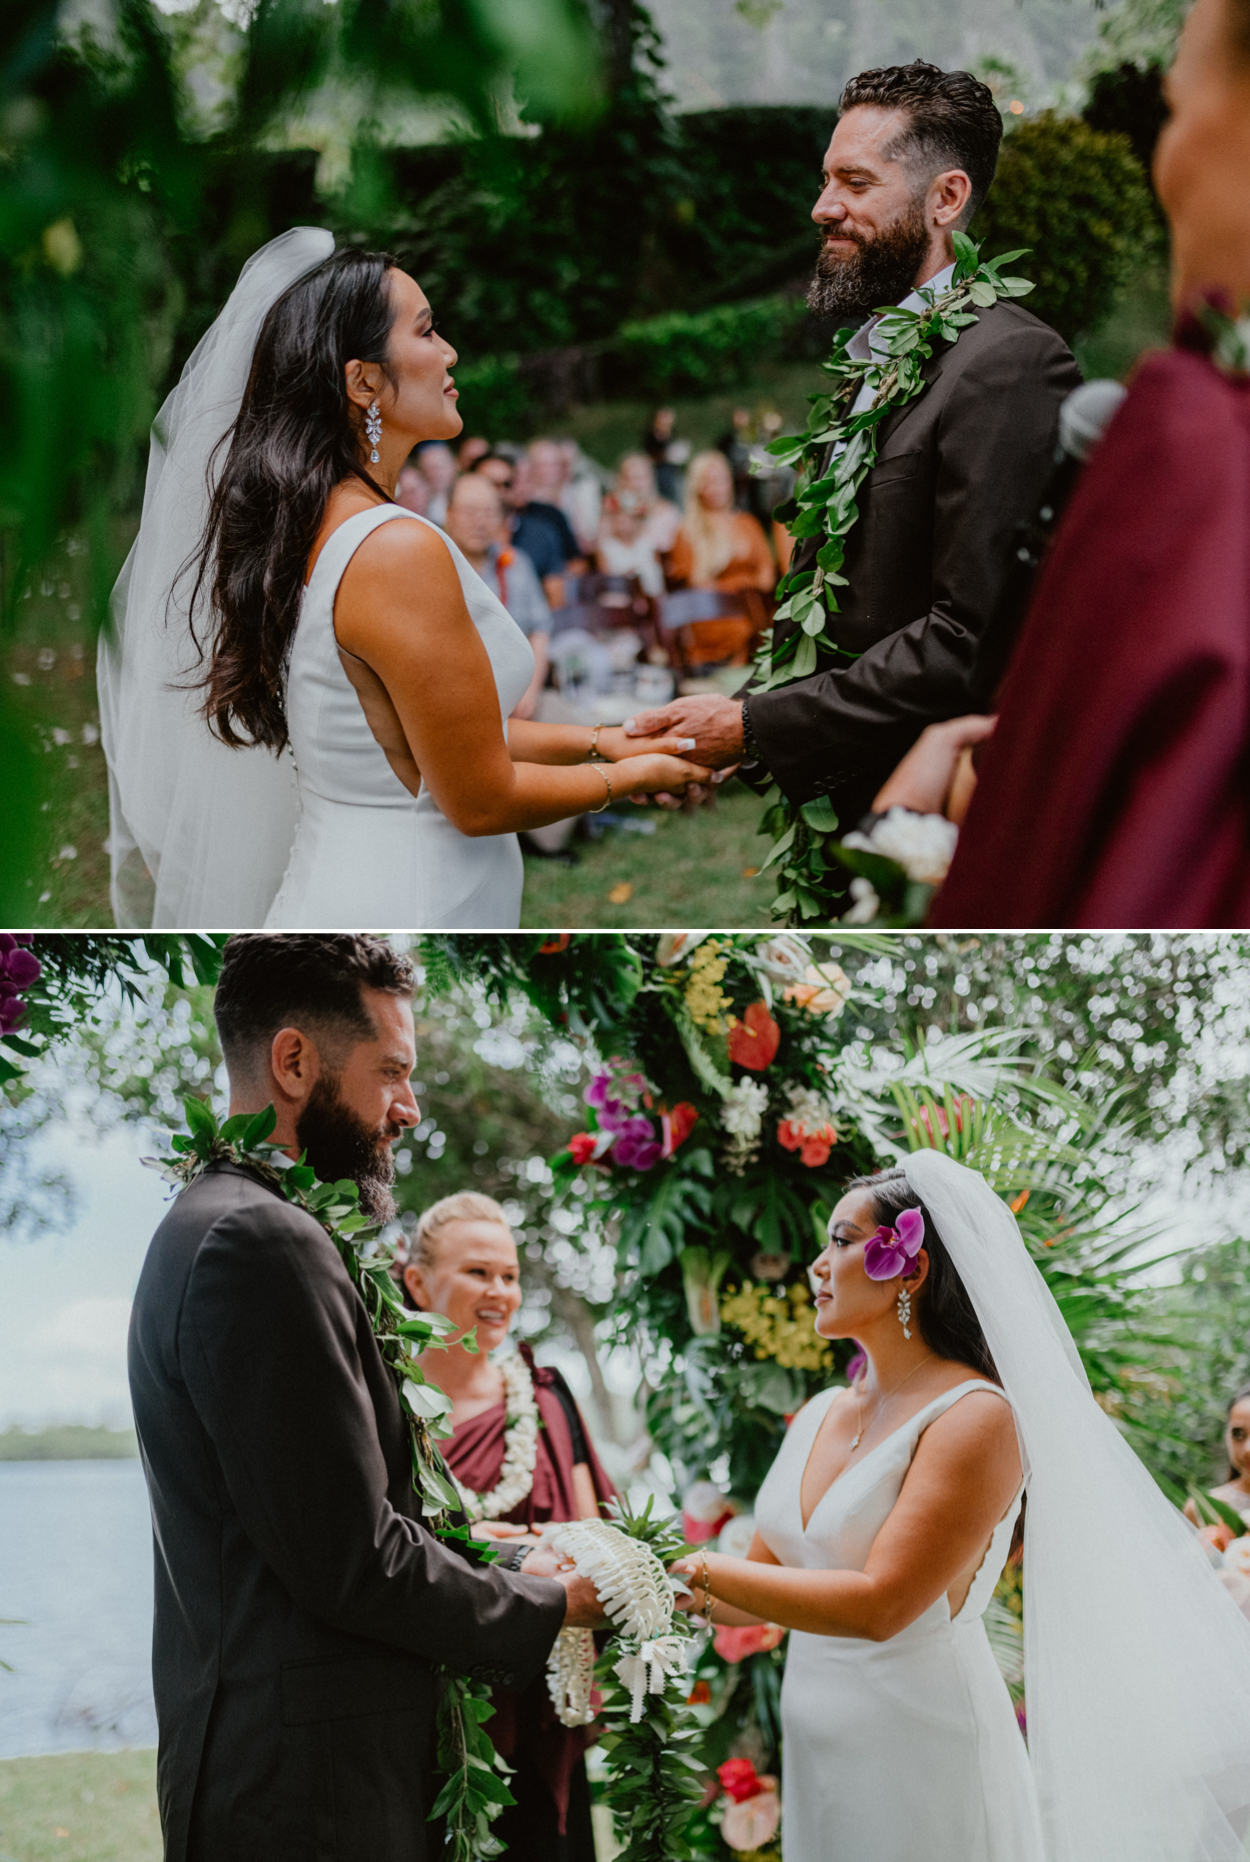 Moli'i fishpond Hawaii bride and groom wedding ceremony